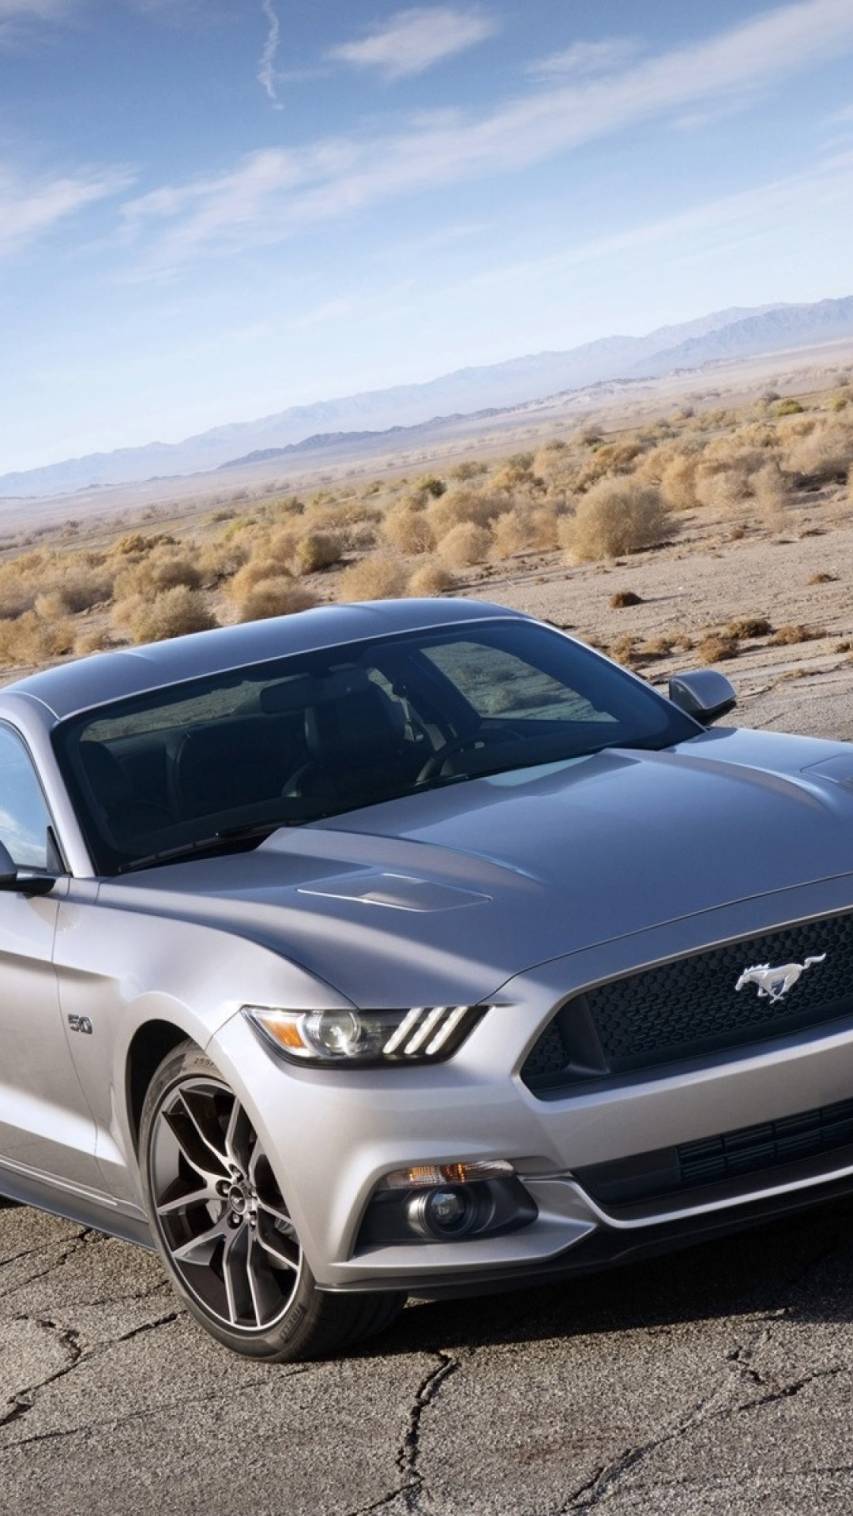 Ford Mustang Logo | 02 - PNG Logo Vector Downloads (SVG, EPS)